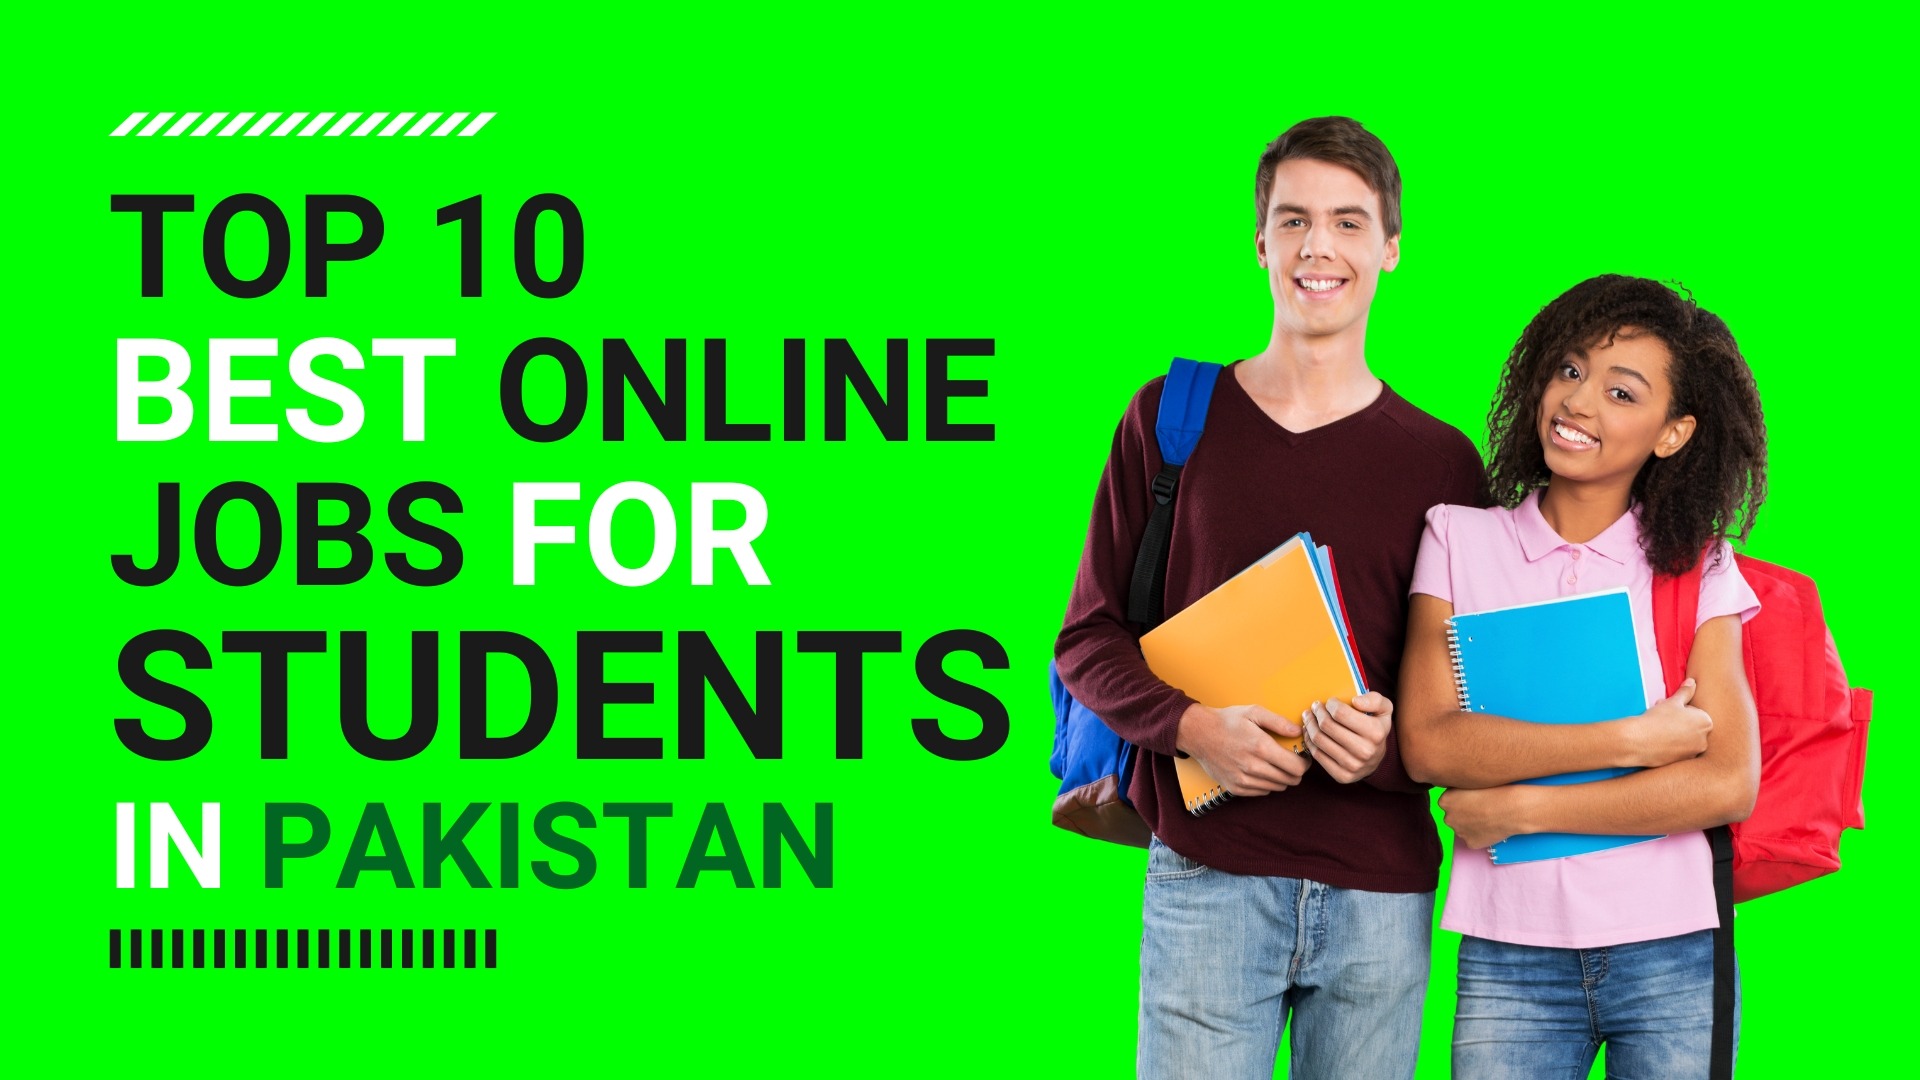 Online Jobs in Pakistan for Students